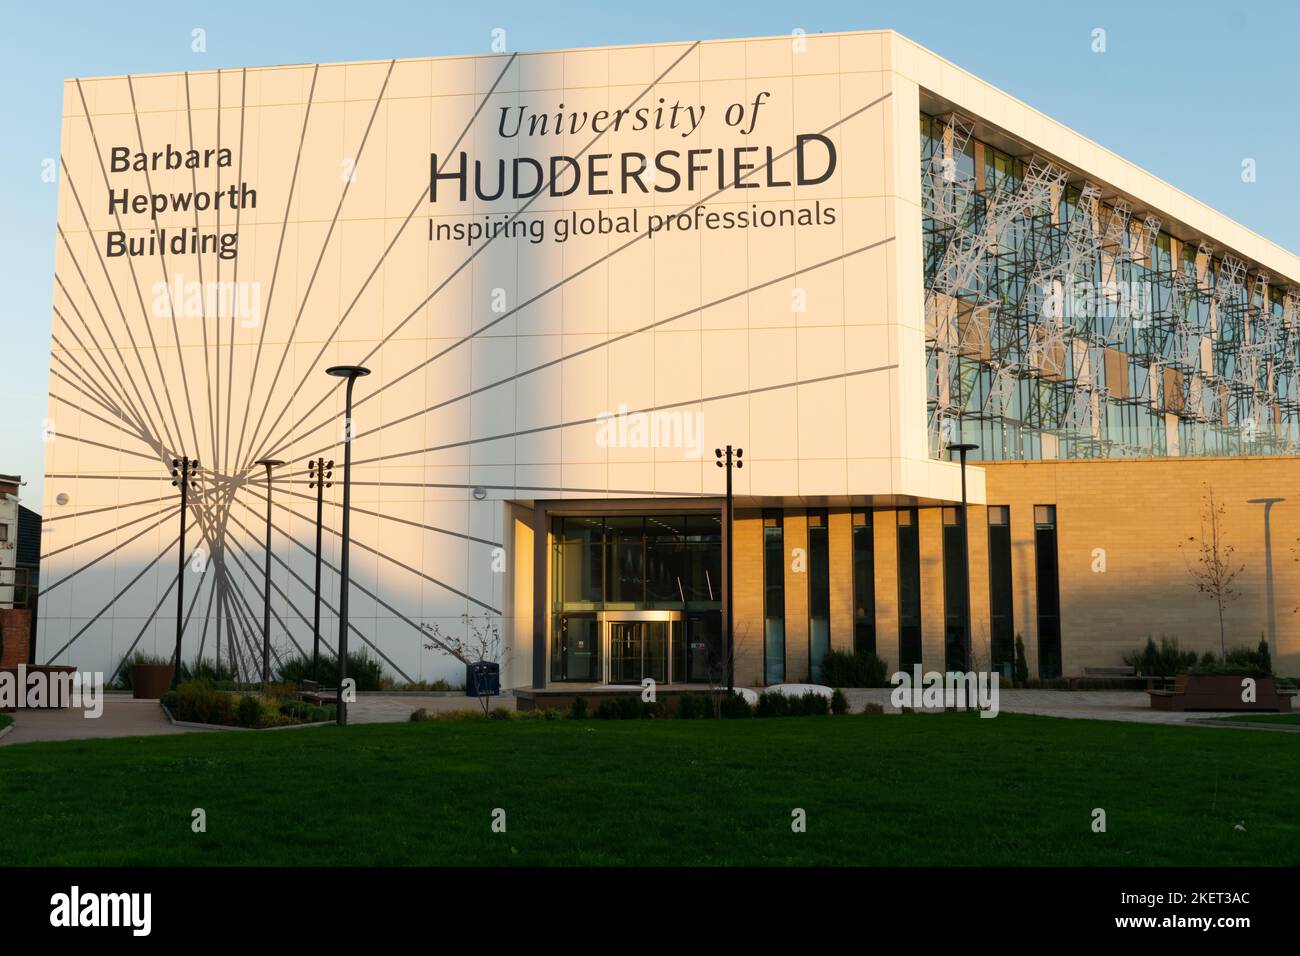 Barbara Hepworth Building, University of Huddersfield, Yorkshire, UK Stock Photo